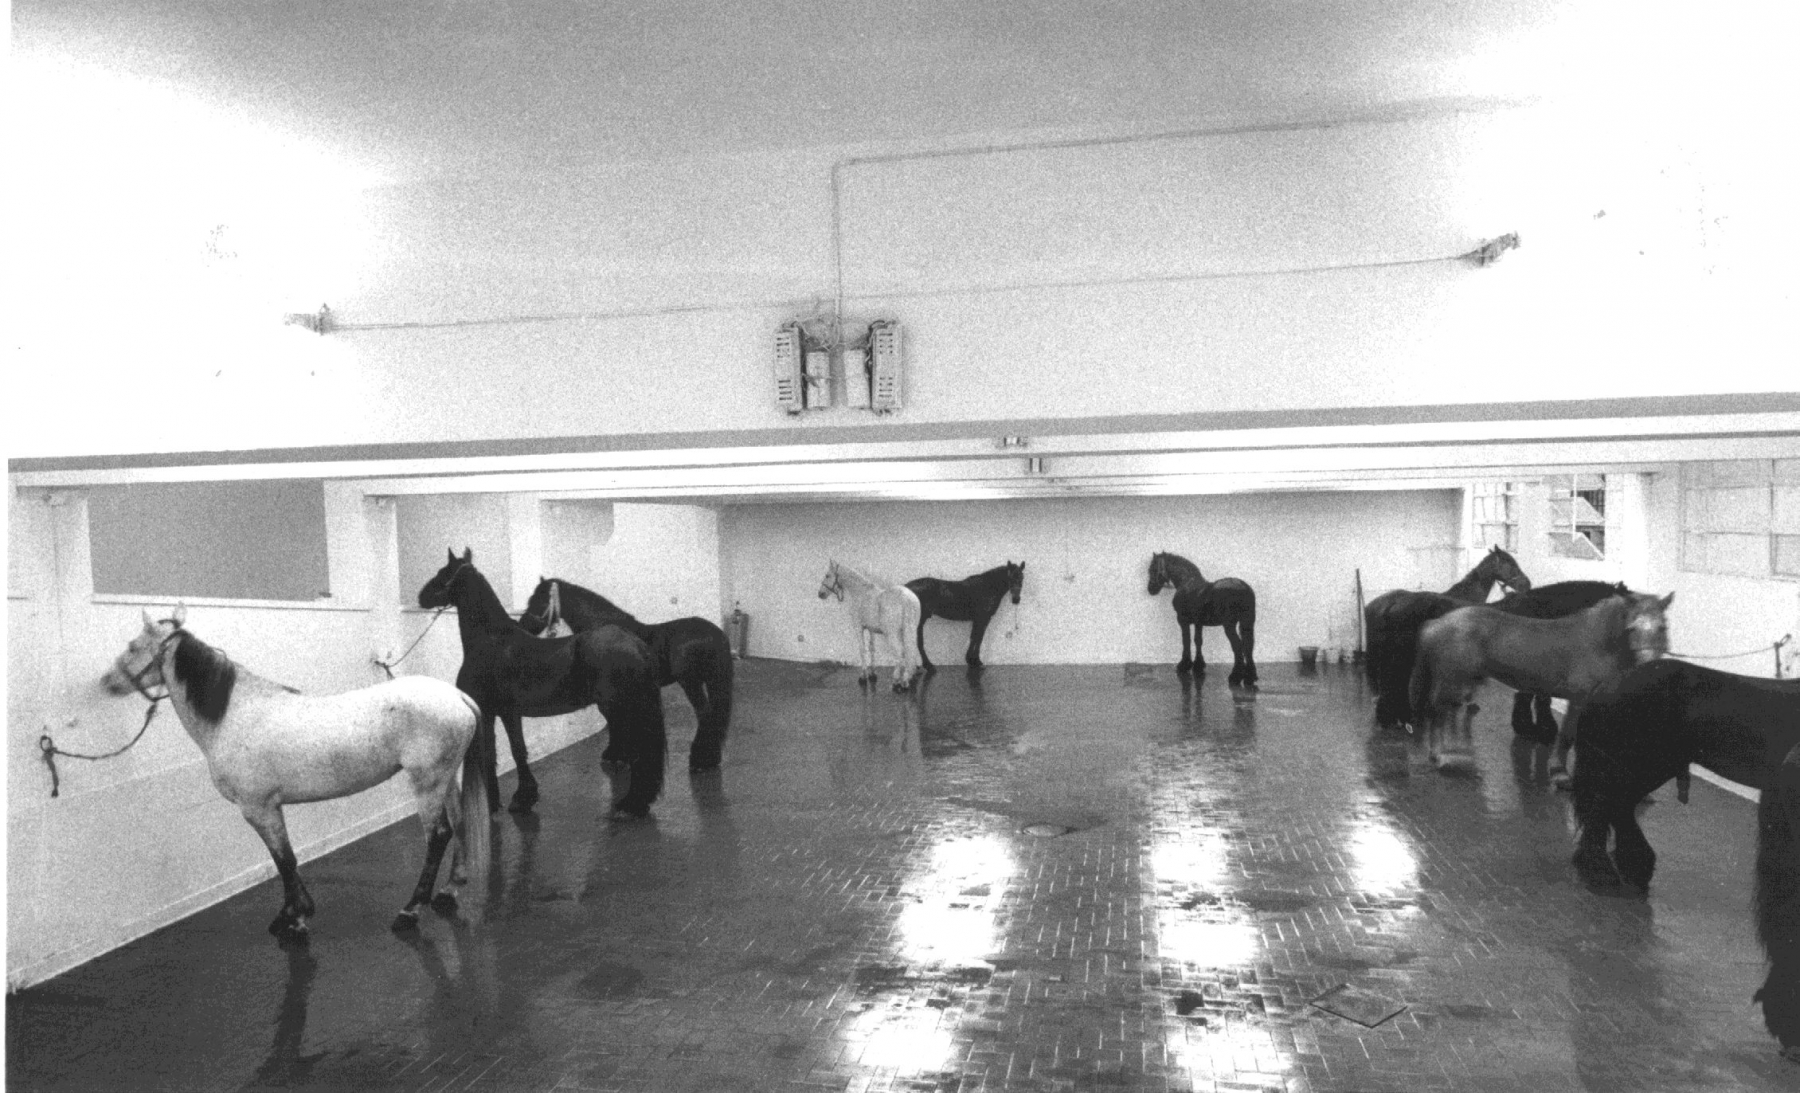 Jannis Kounellis, Untitled (12 Horses) (1969)
&copy; Jannis Kounellis Estate
Courtesy Jannis Kounellis Estate and Gavin Brown&#39;s enterprise New York/Rome, photo by Claudio Abate

&nbsp;